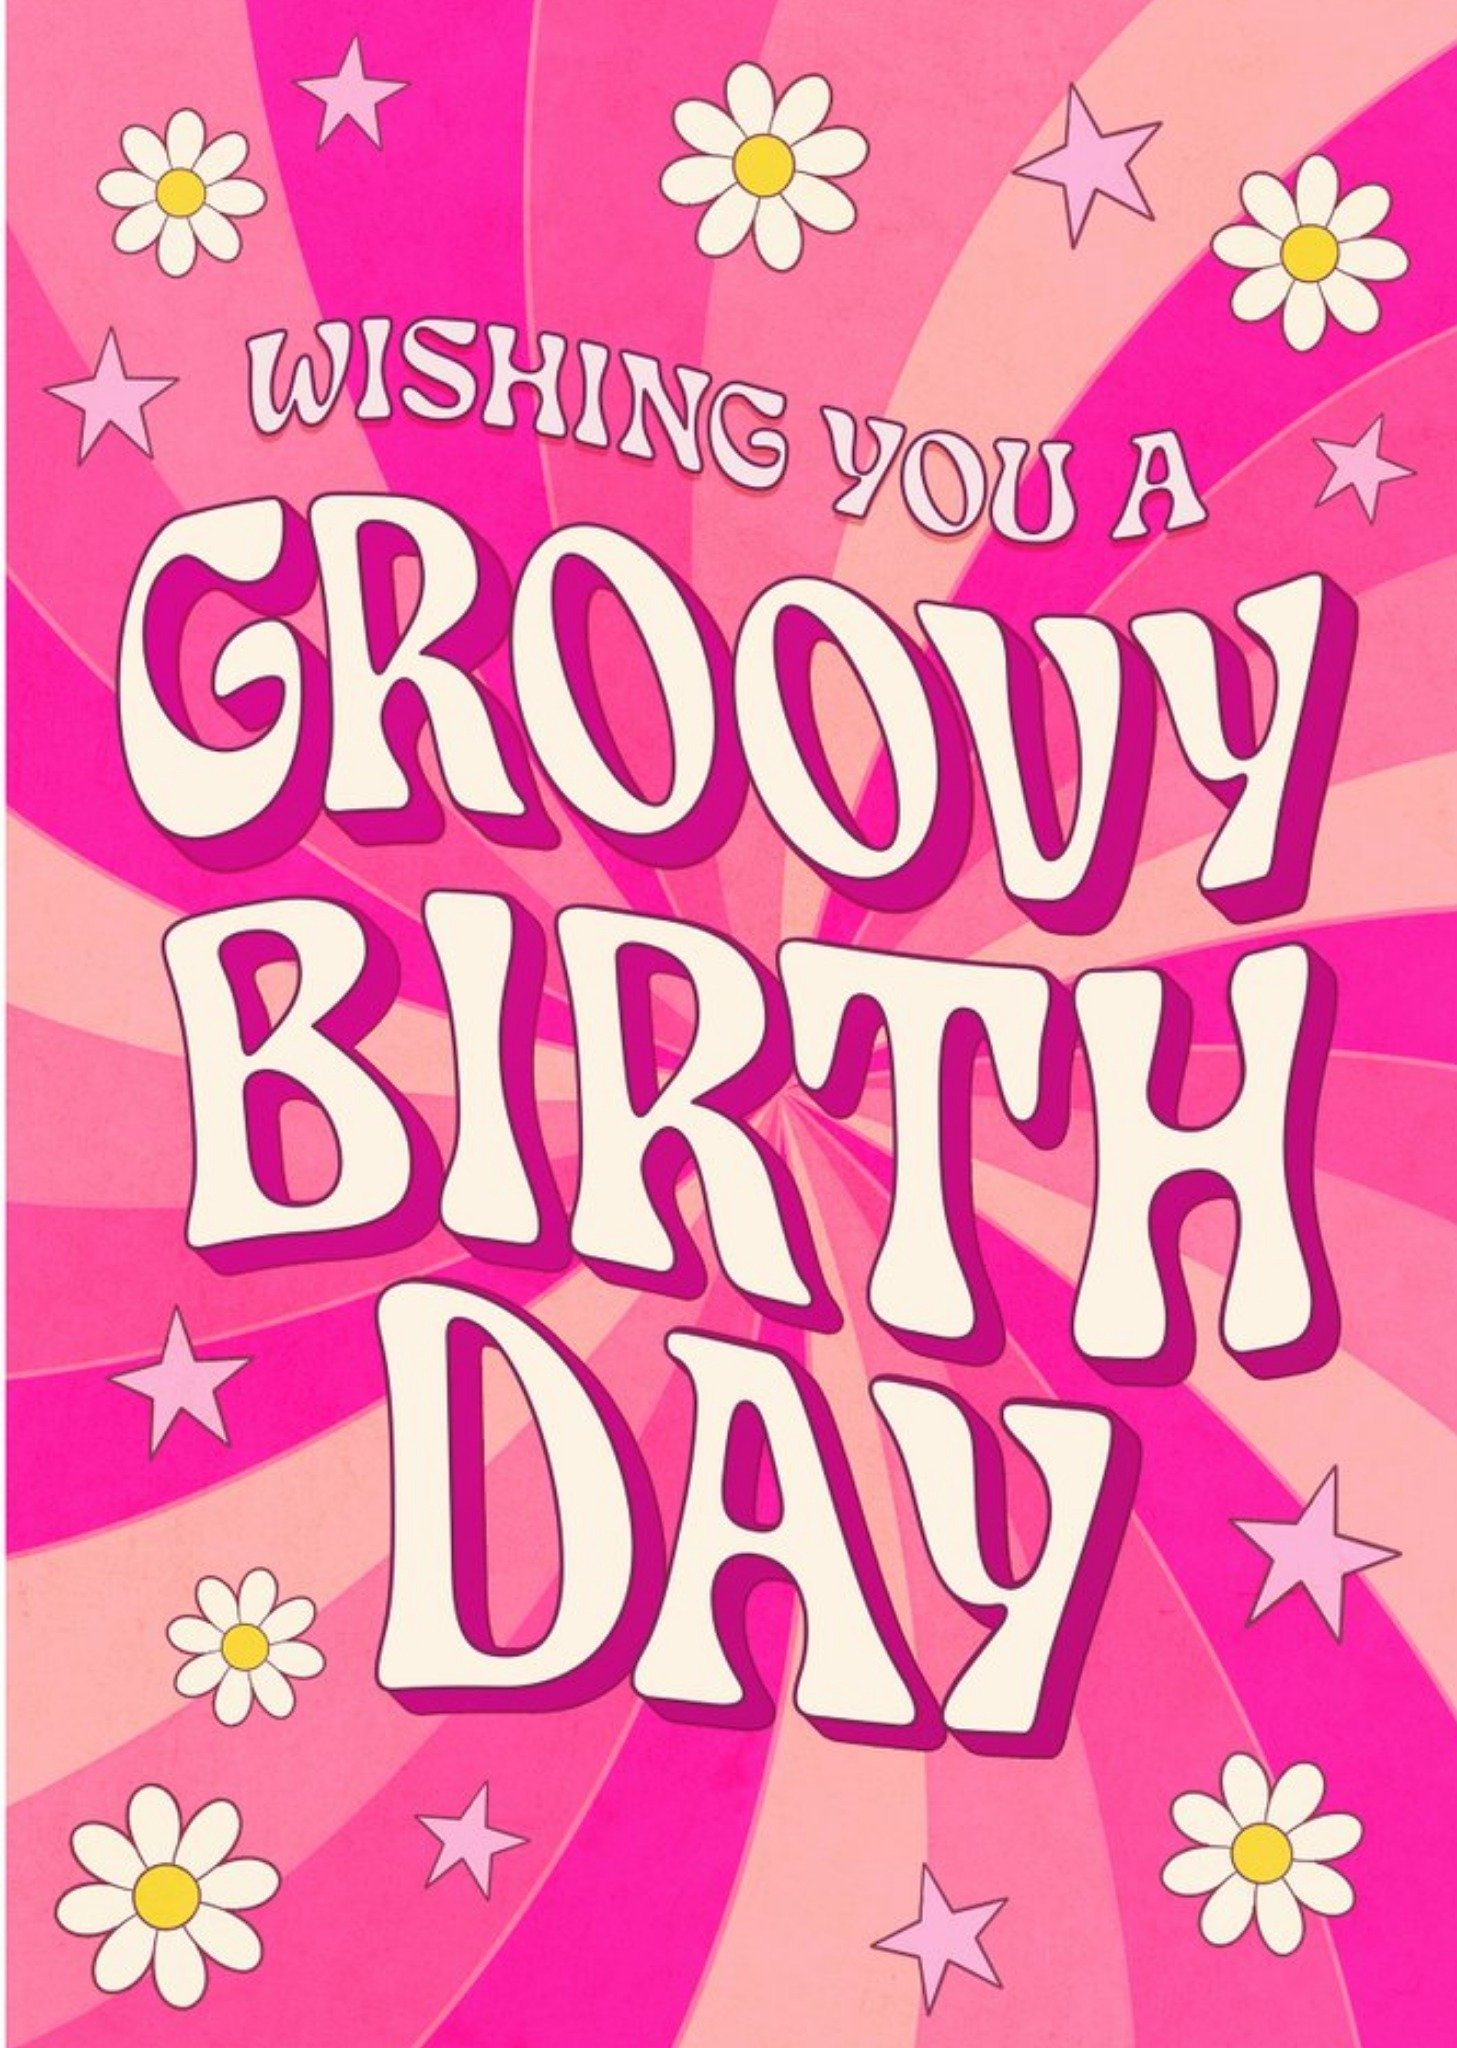 Moonpig Wishing You A Groovy Birthday Day Card Ecard